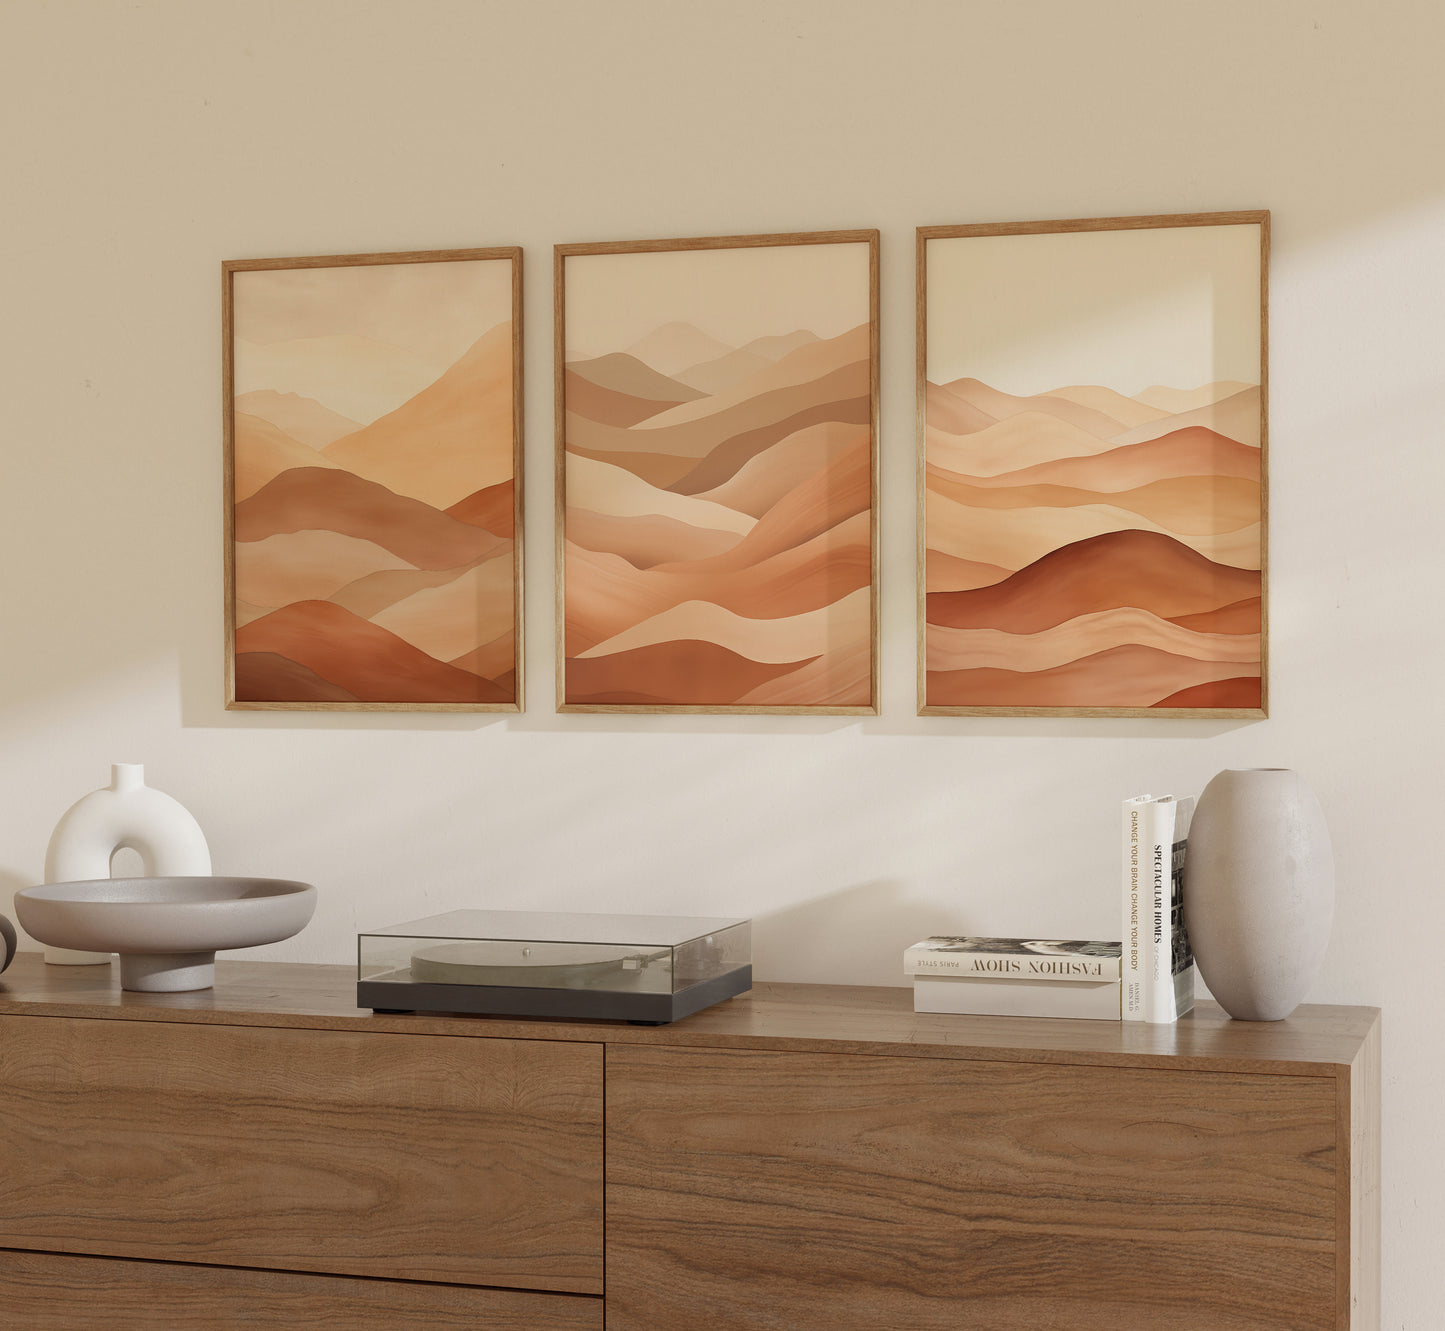 Three framed desert landscape prints above a wooden dresser with decorative items.